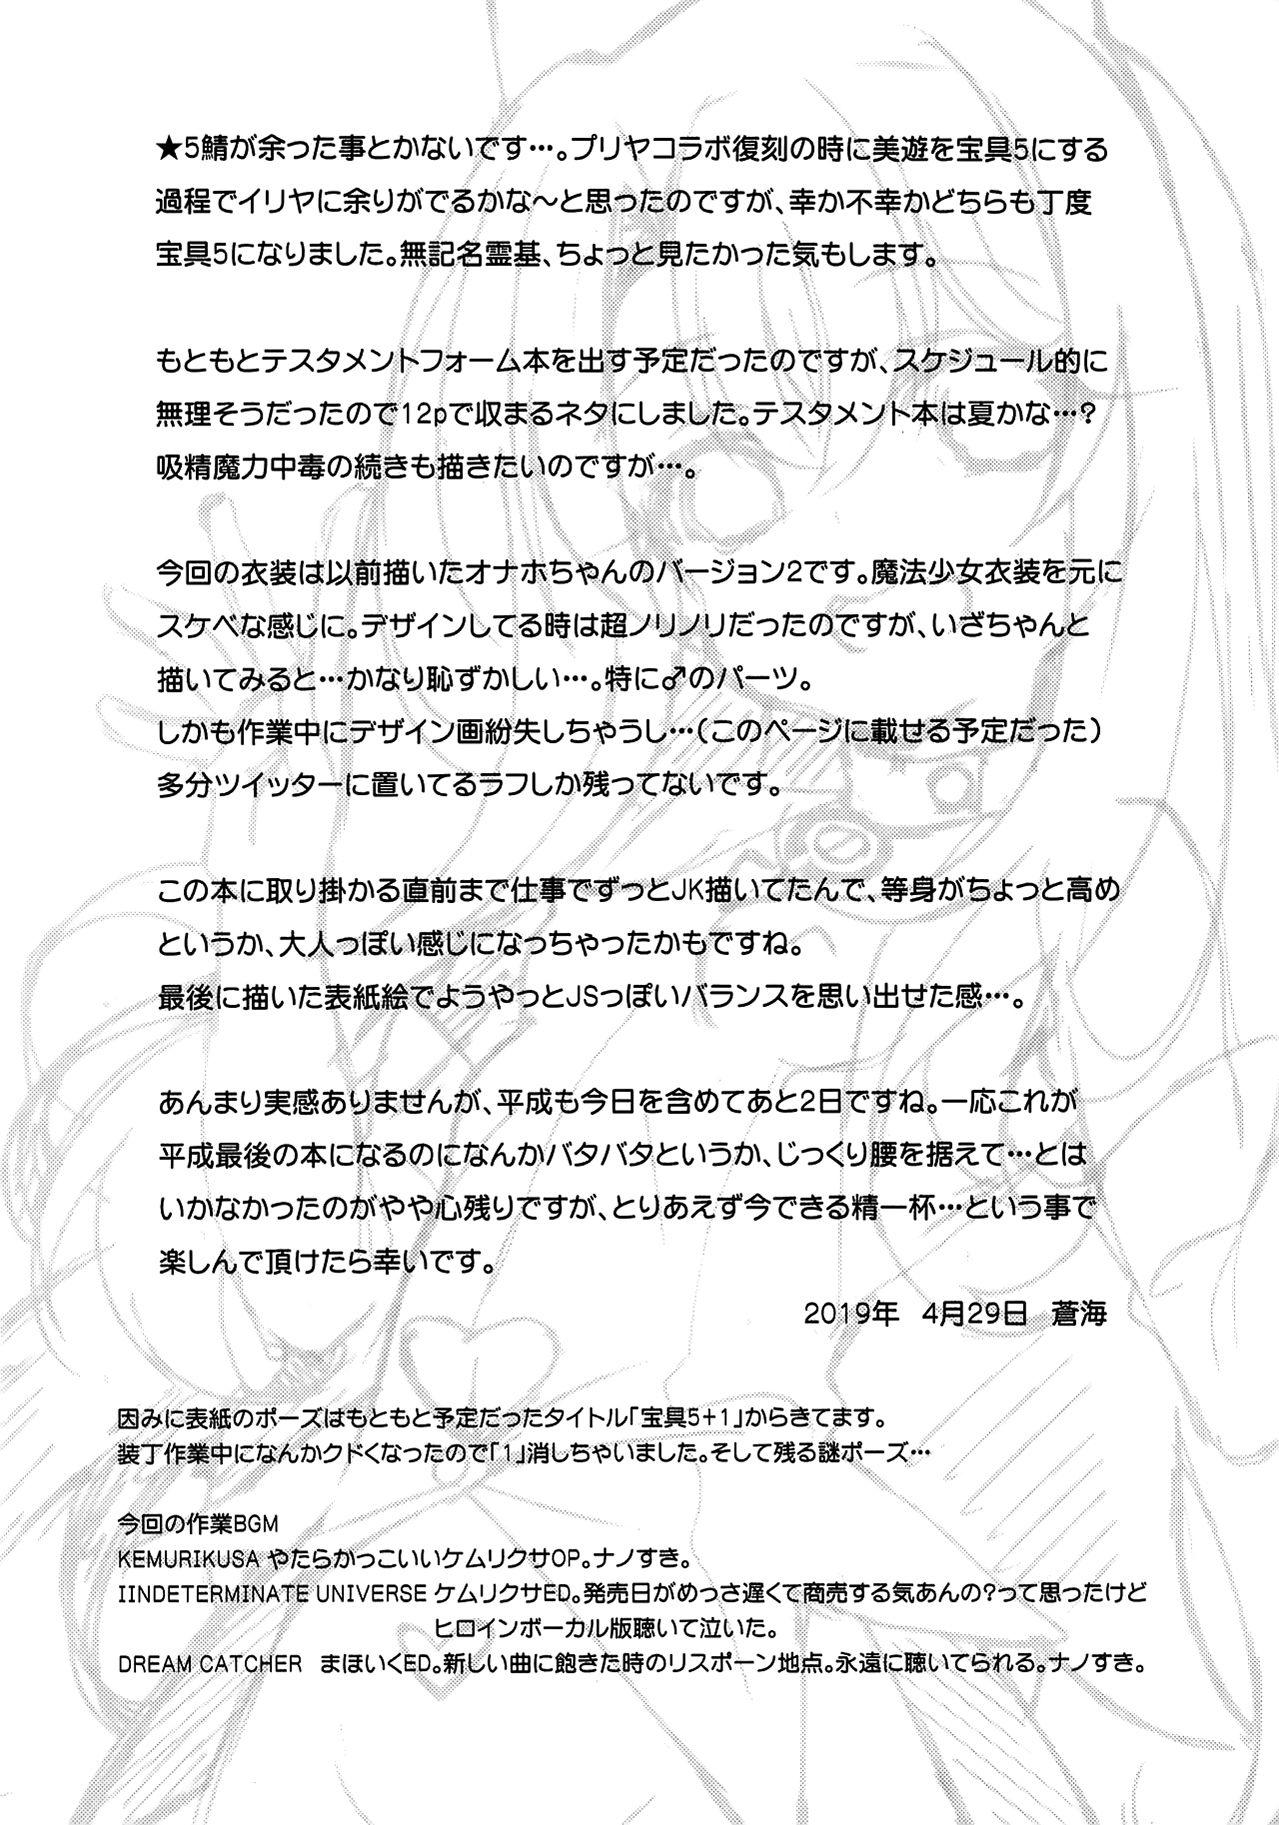 Vip Noble Phantasm 5 plus - Fate kaleid liner prisma illya Slapping - Page 2